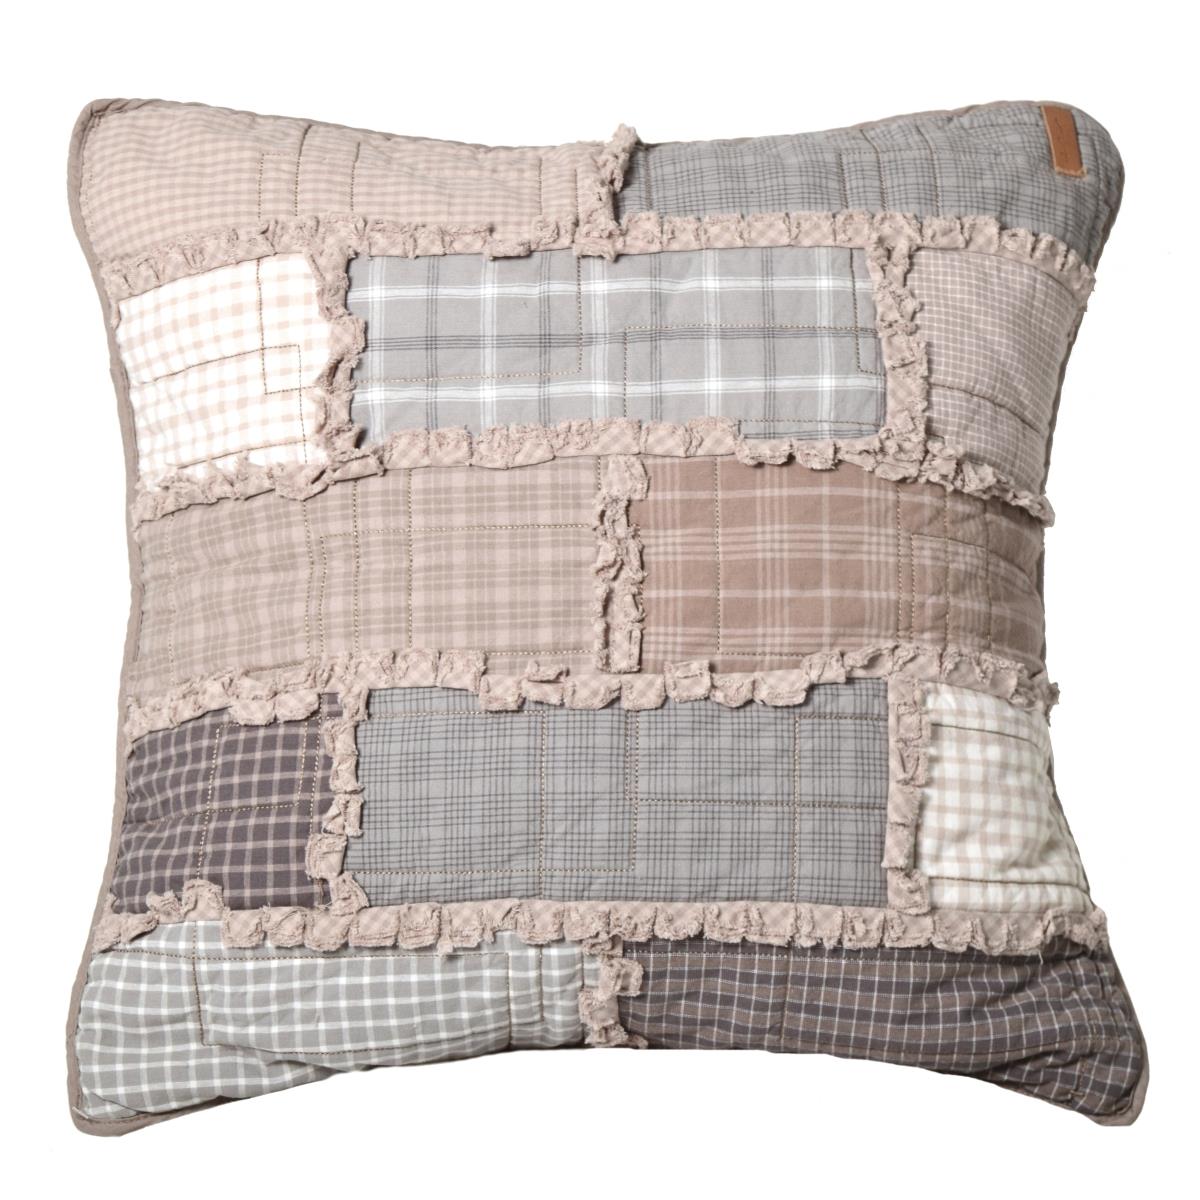 83841 18 X 18 In. Smoky Cobblestone Decorative Pillow - Grey, Taupe & White